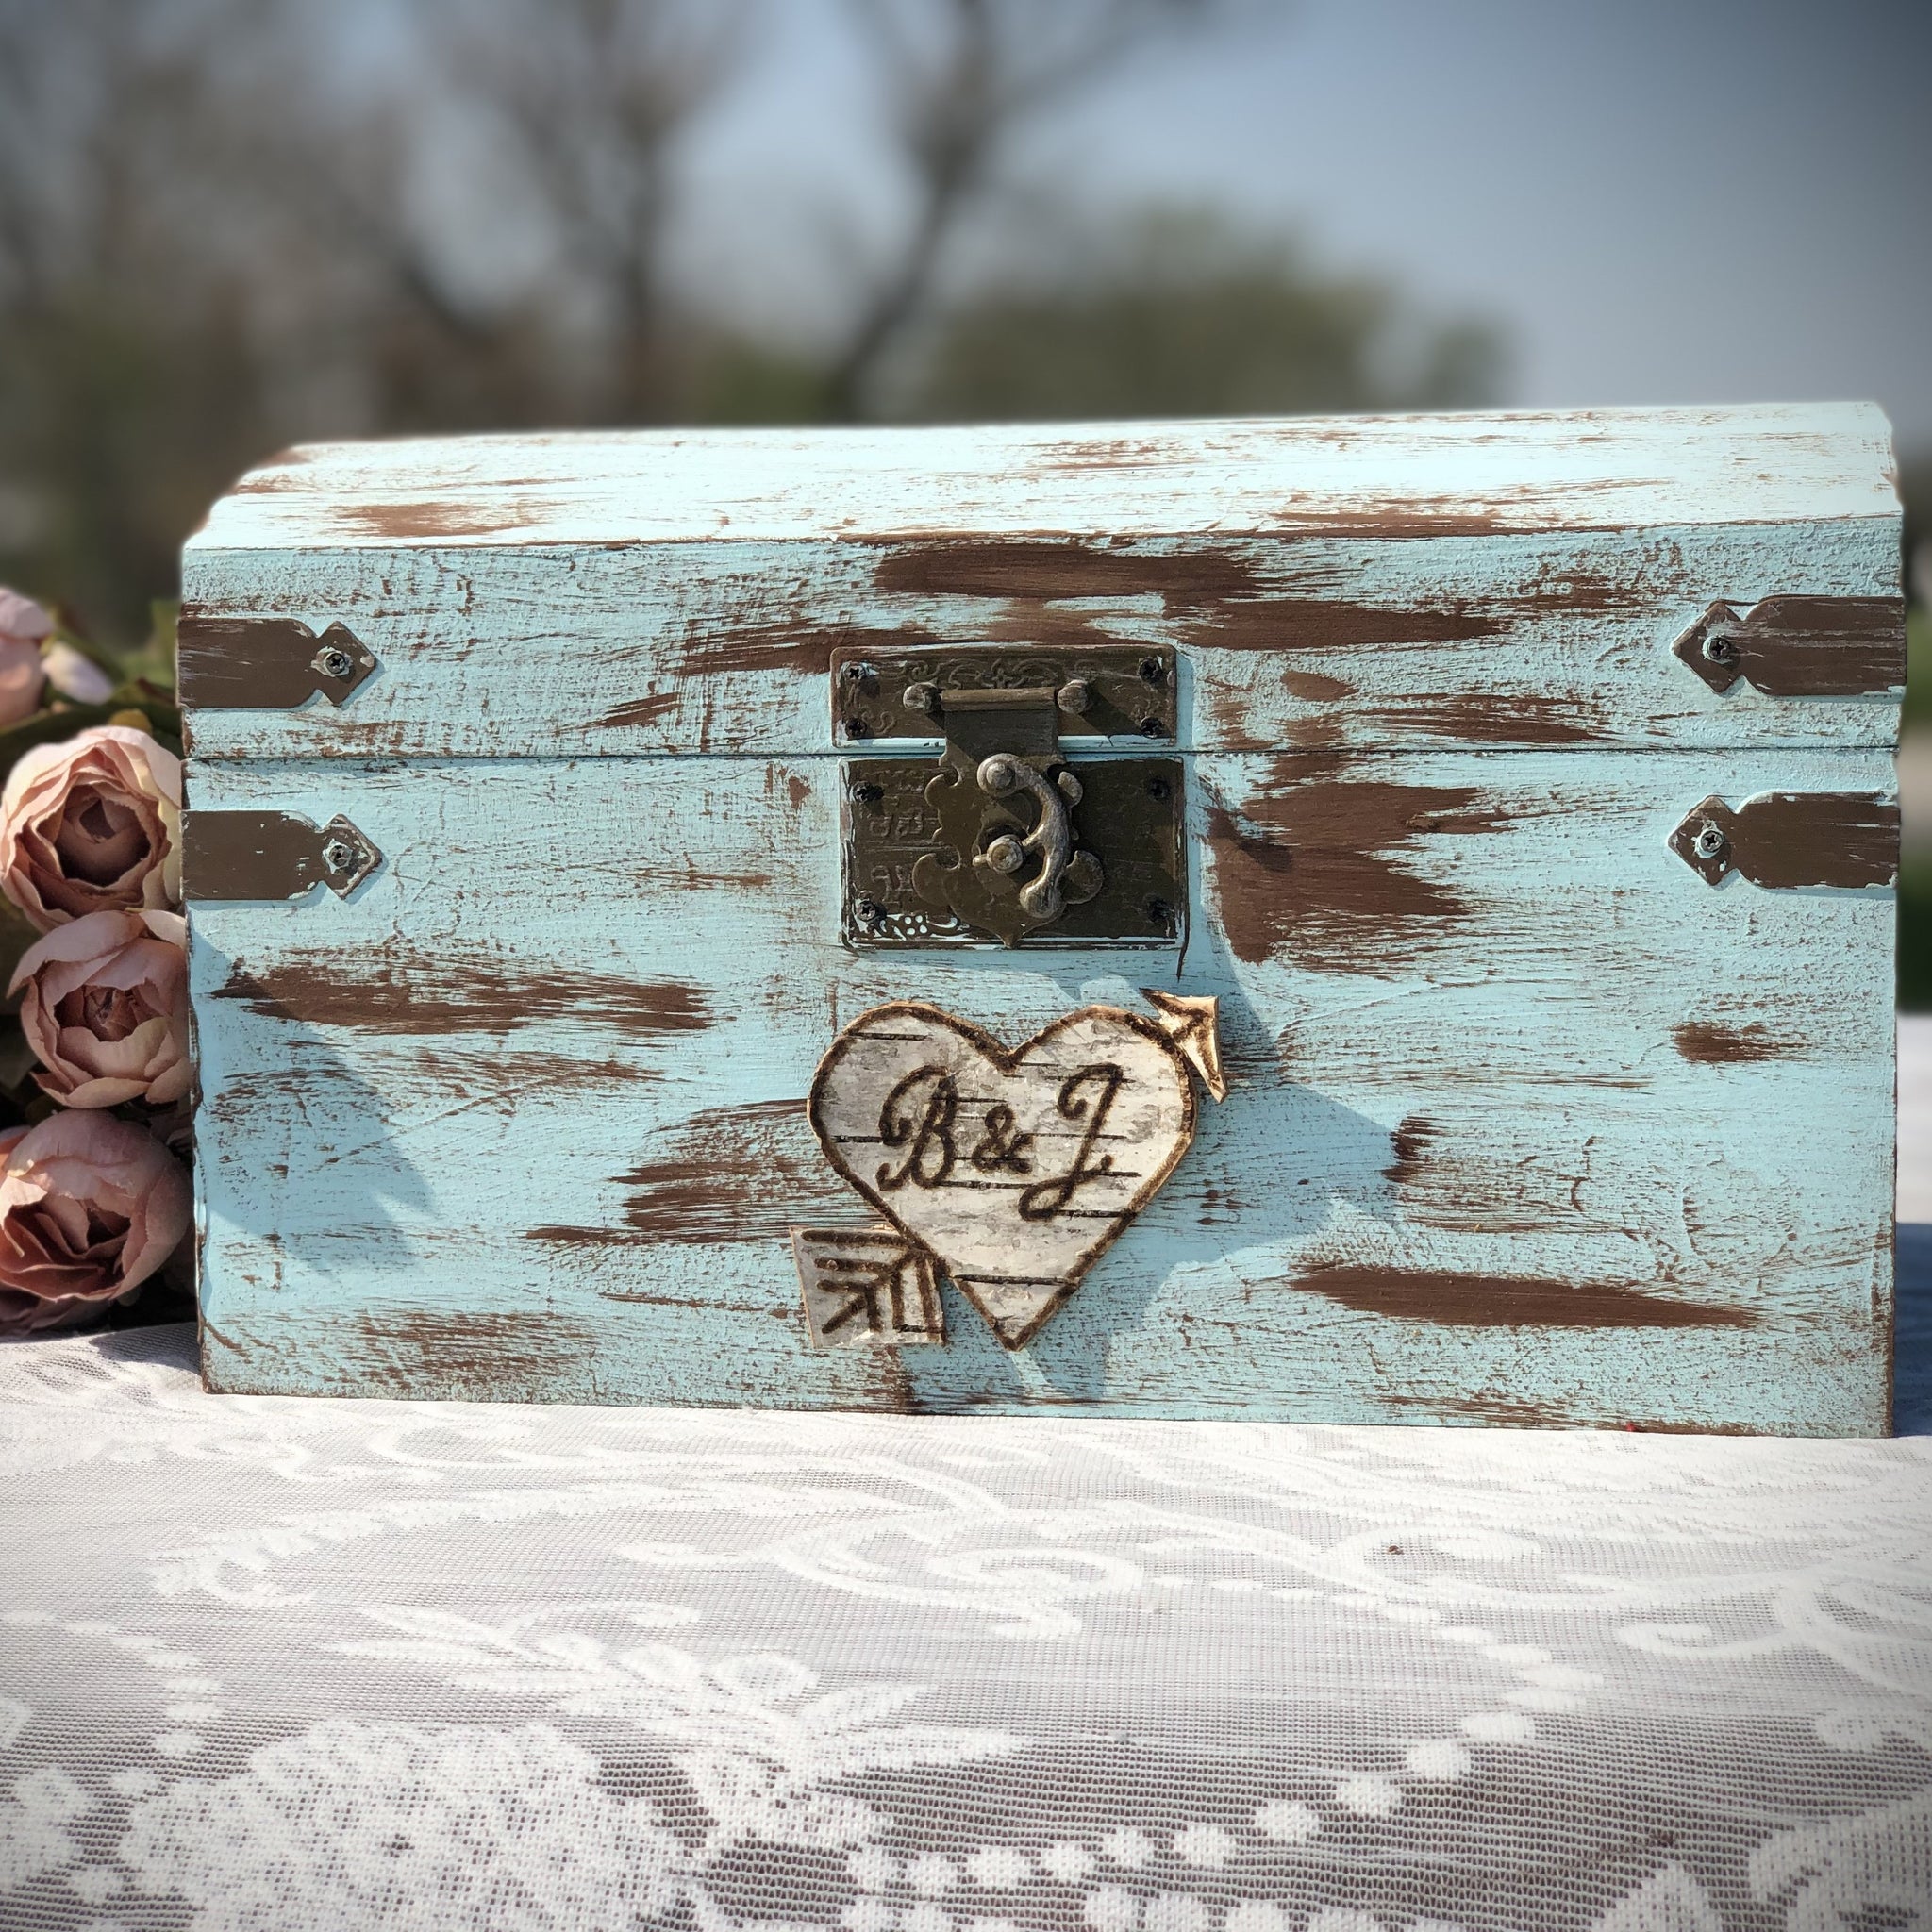 Card Box for Wedding With Slot Rustic Wedding Card Box 